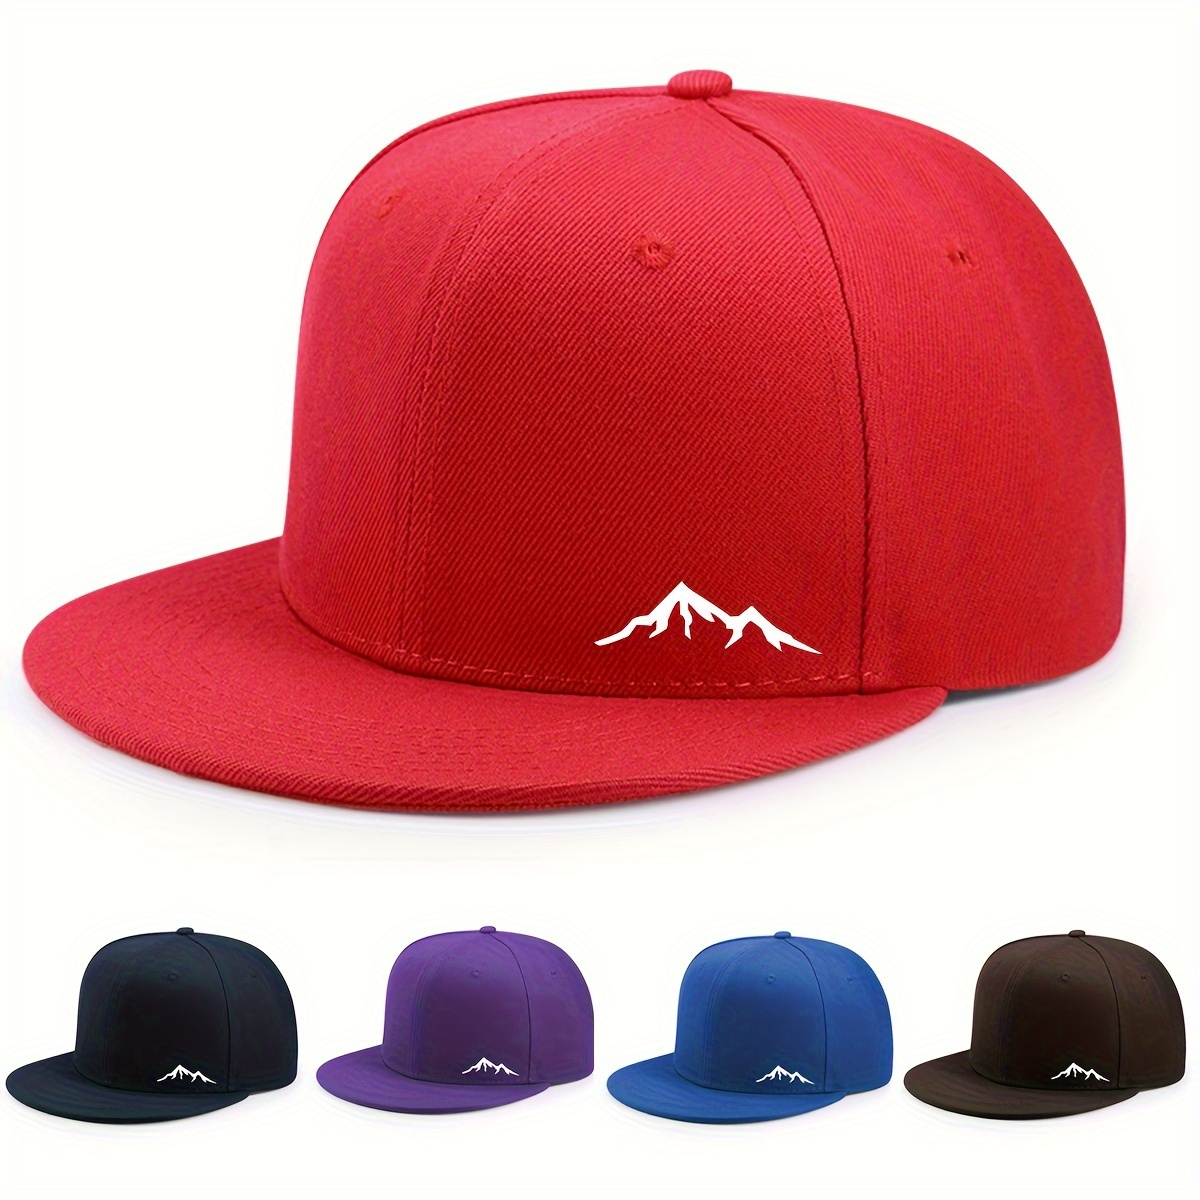 

Unisex Adjustable Baseball Cap - Trendy, Sun-protective Flat Brim Hat For Outdoor Activities, Polyester